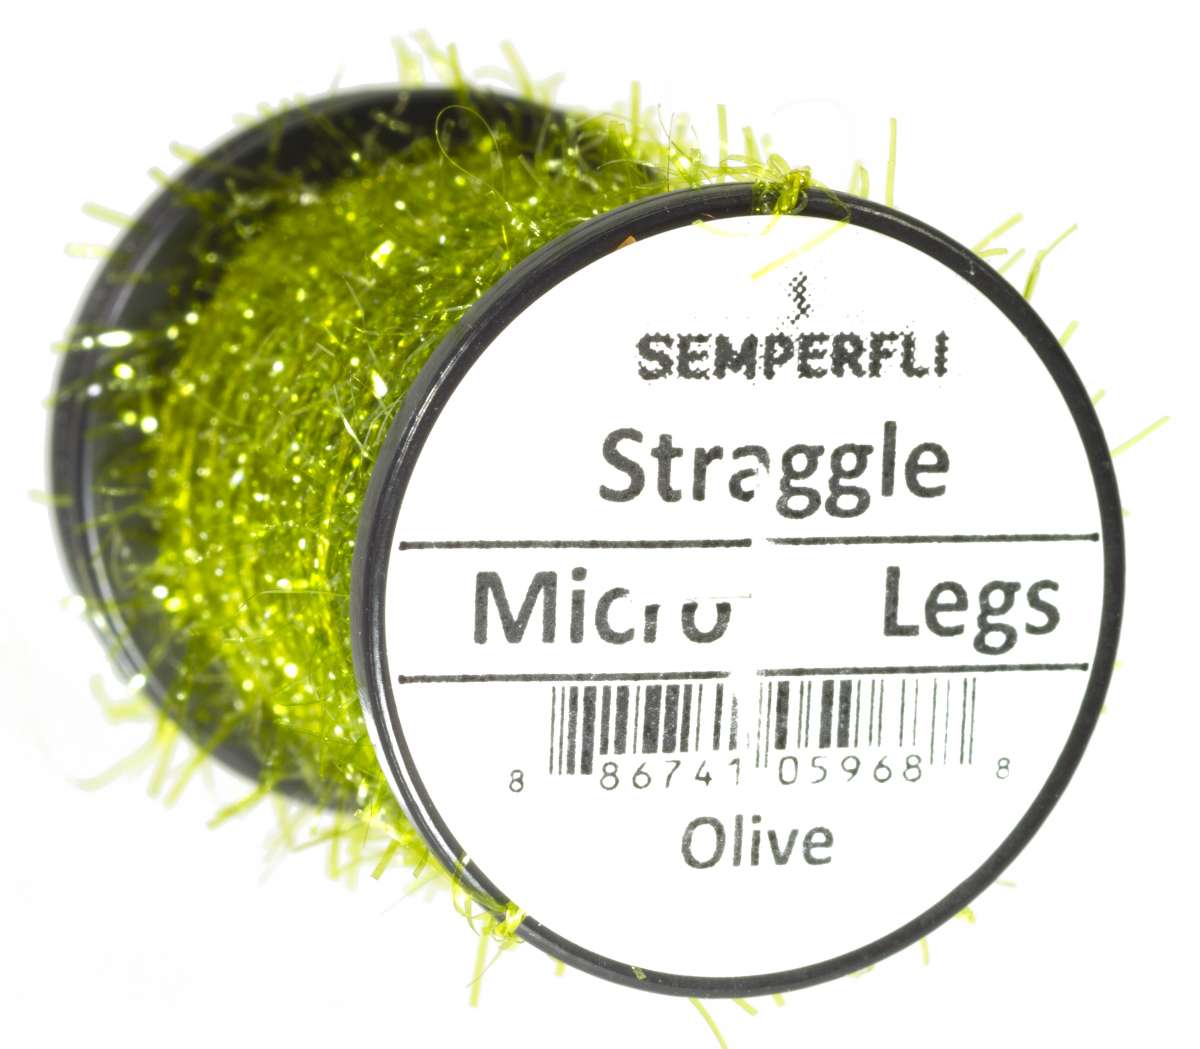 Straggle Legs Sem-0200-ol